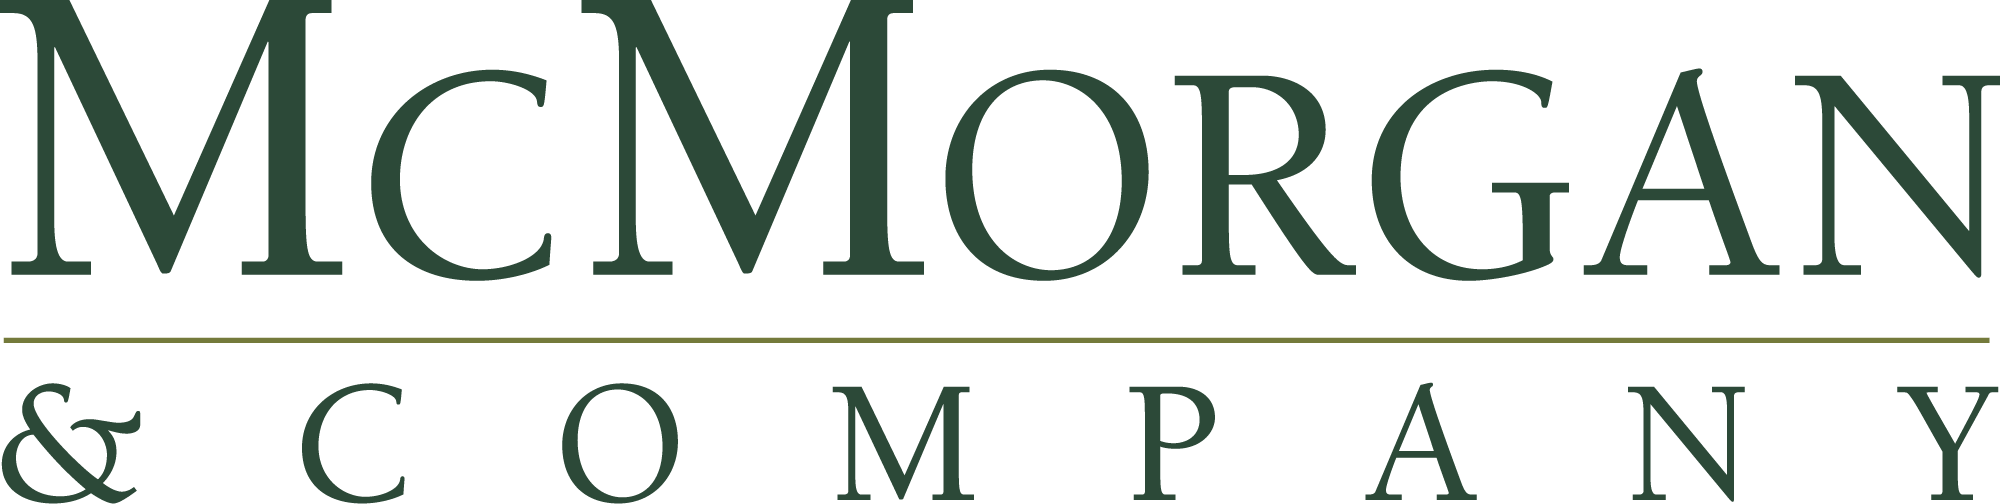 mcmorgan-logo